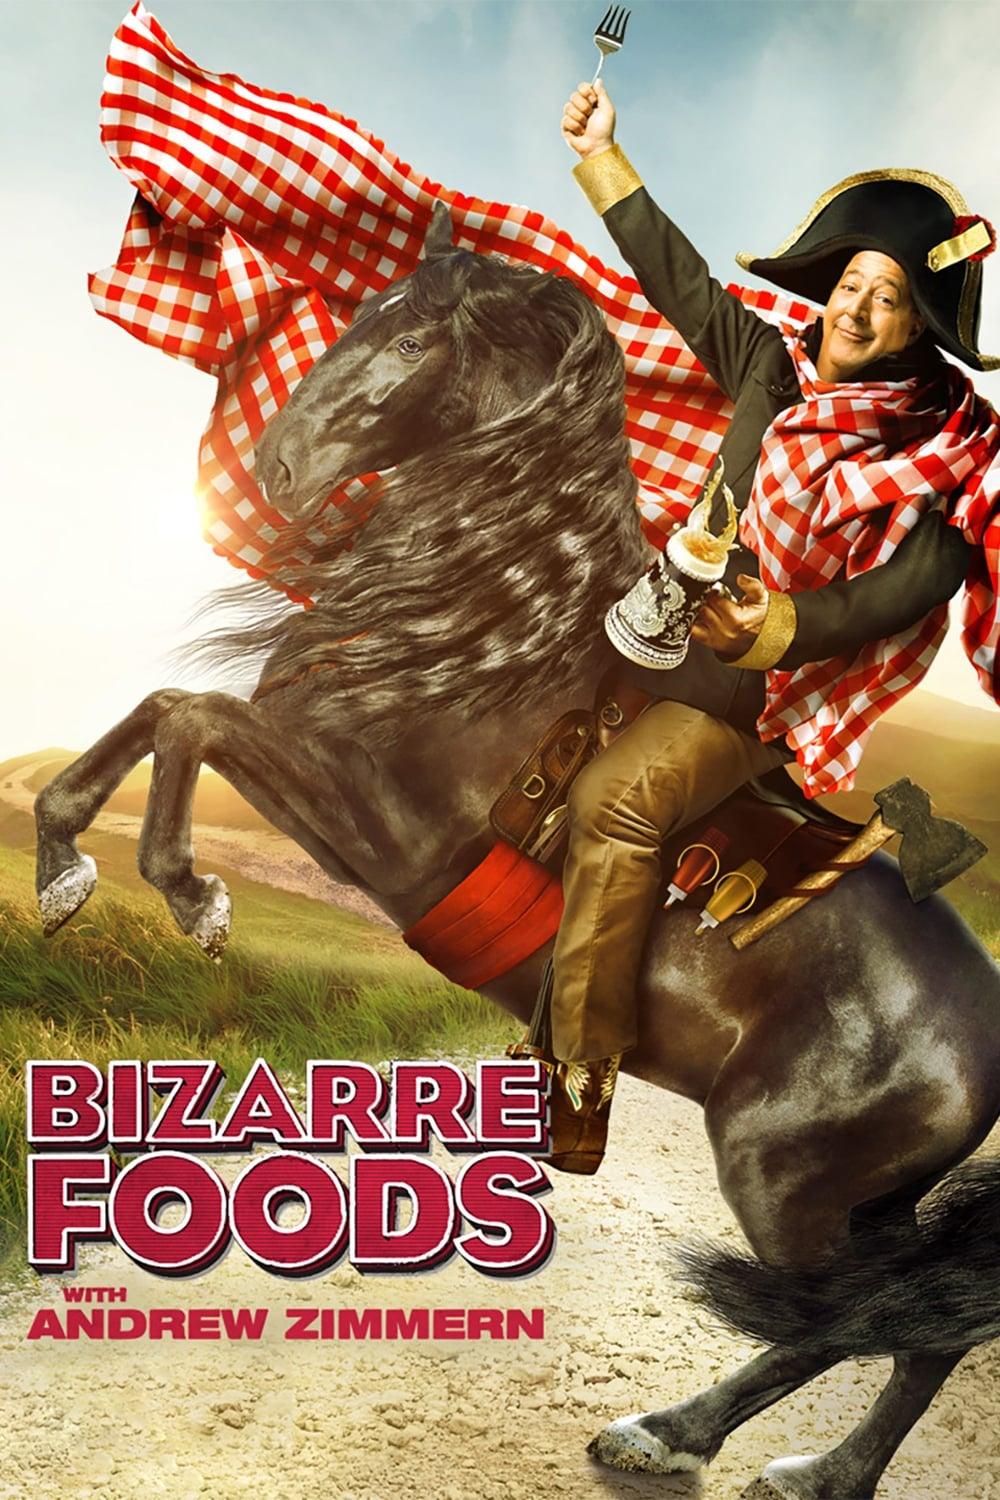 Bizarre Foods America poster